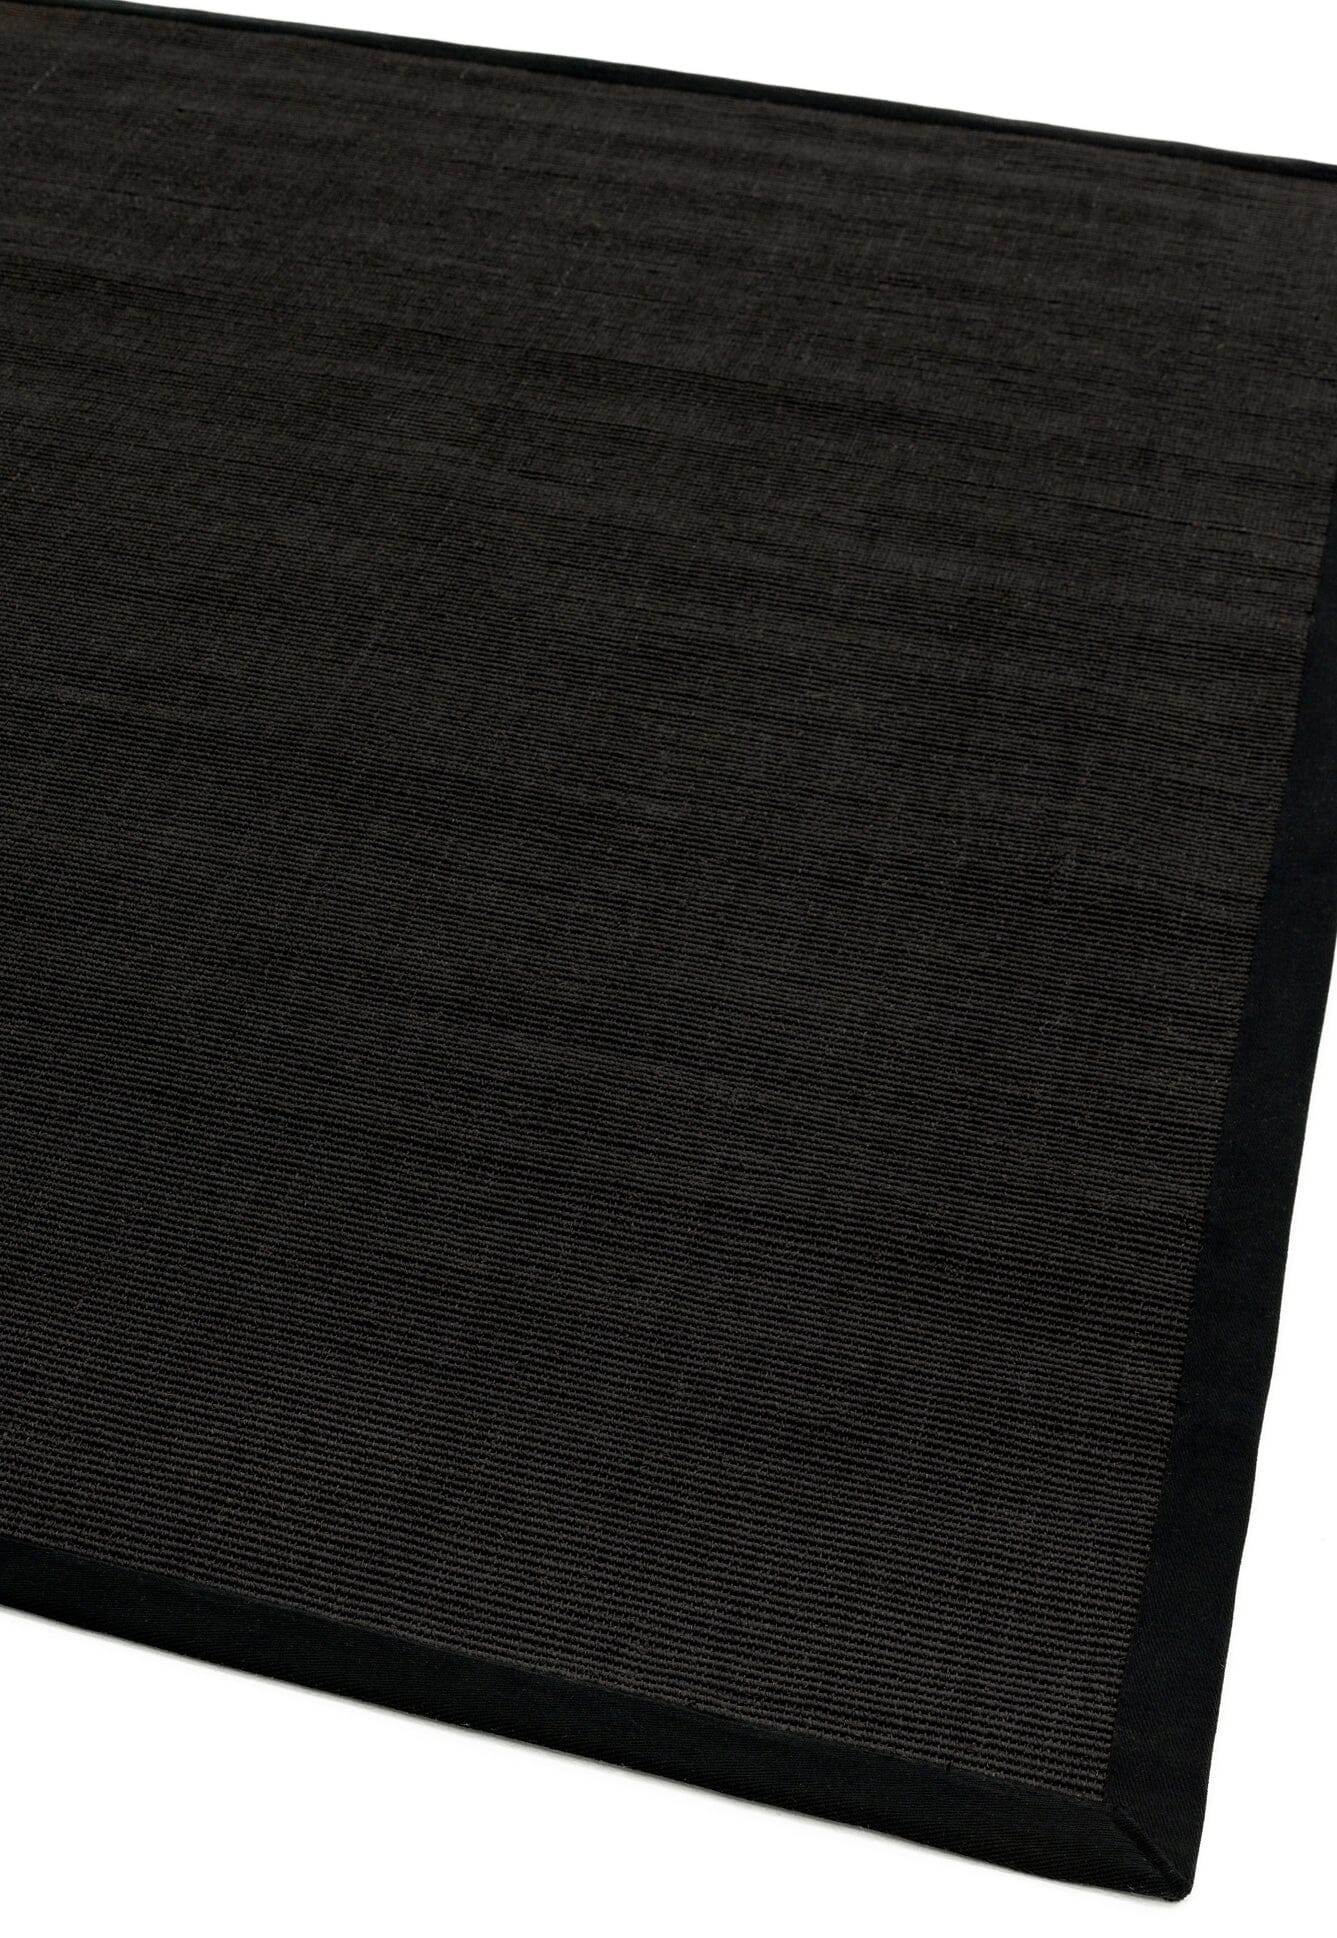 Asiatic Carpets Sisal Machine Woven Rug Black/Black - 68 x 300cm